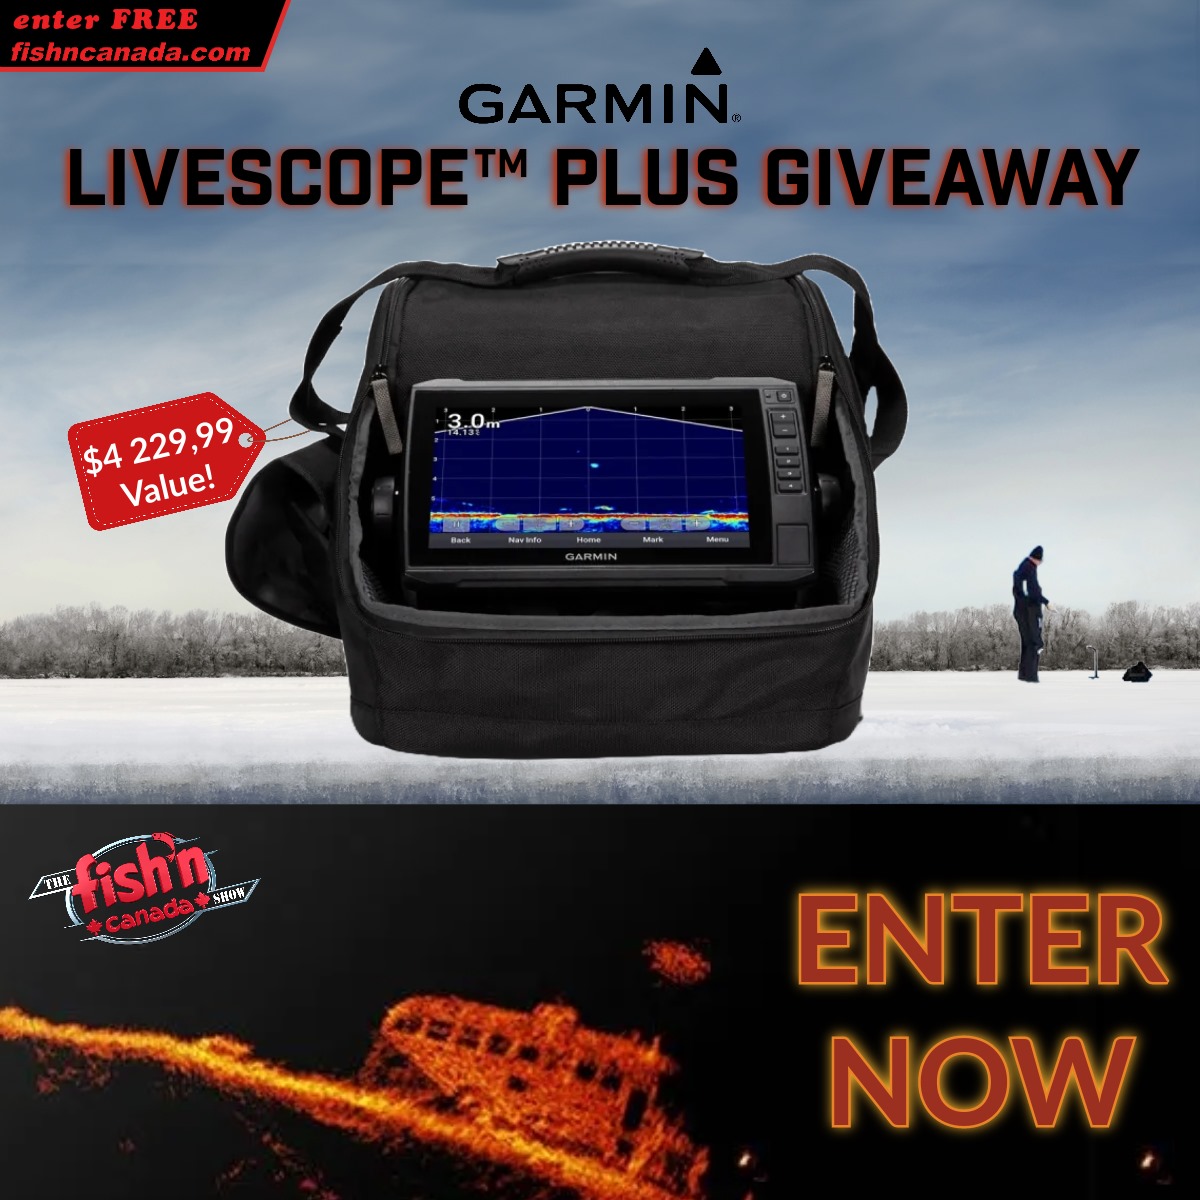 GARMIN LiveScope™ Plus Ice Fishing Bundle Giveaway - Fish'n Canada